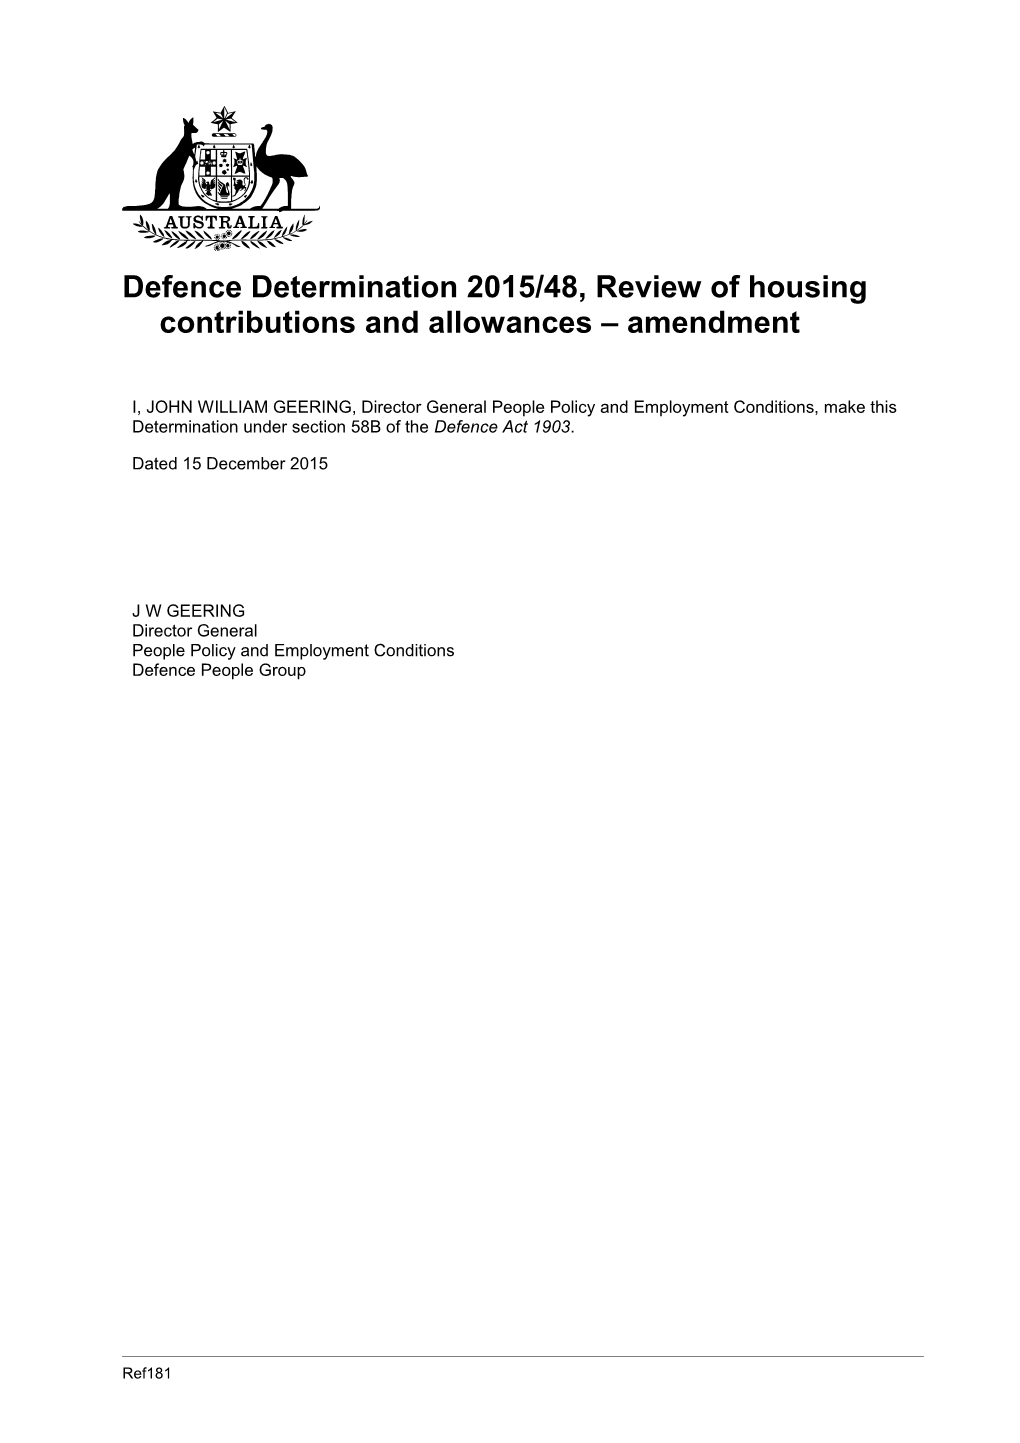 Defence Determination 2015/48,Review of Housing Contributions and Allowances Amendment